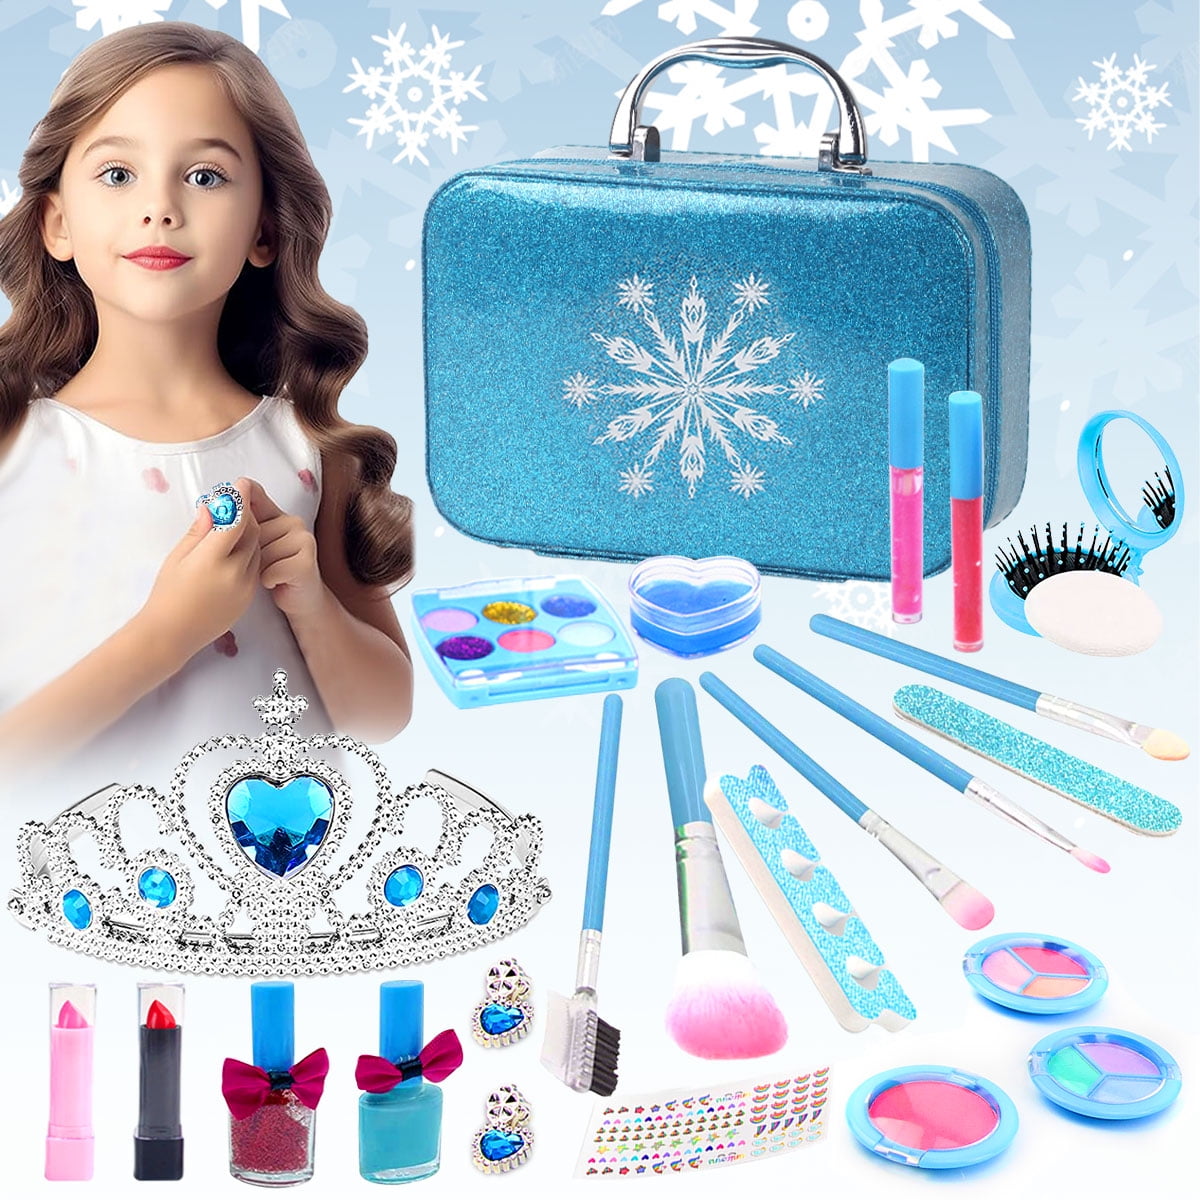 Natural Makeup Starter Kit + Back to School Gift Idea